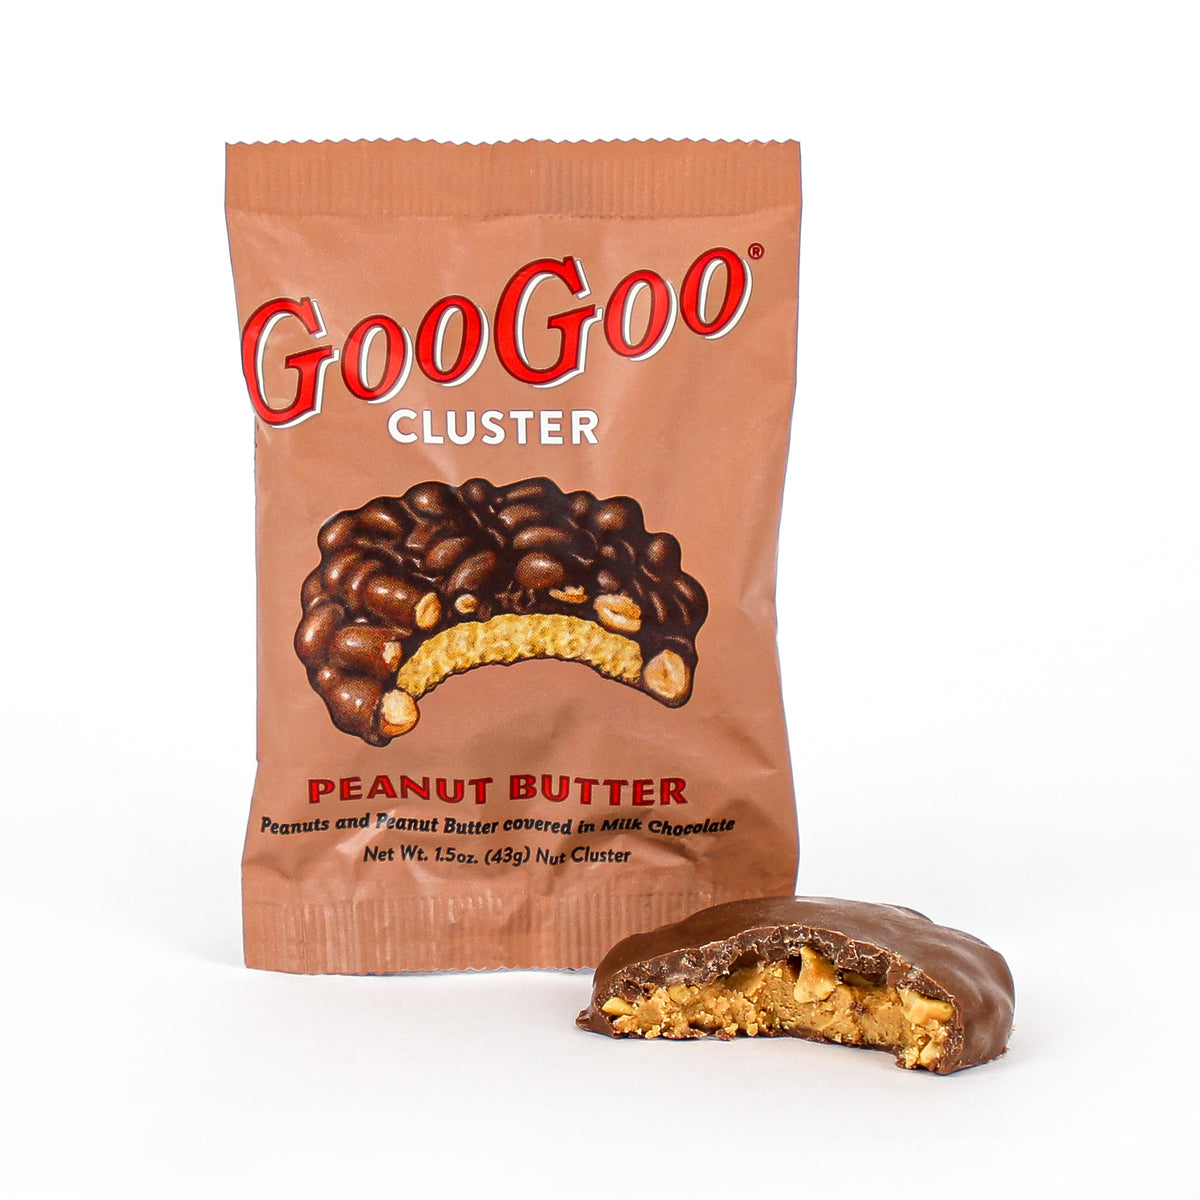 Peanut Butter Goo Goo Cluster - 3 Count Box